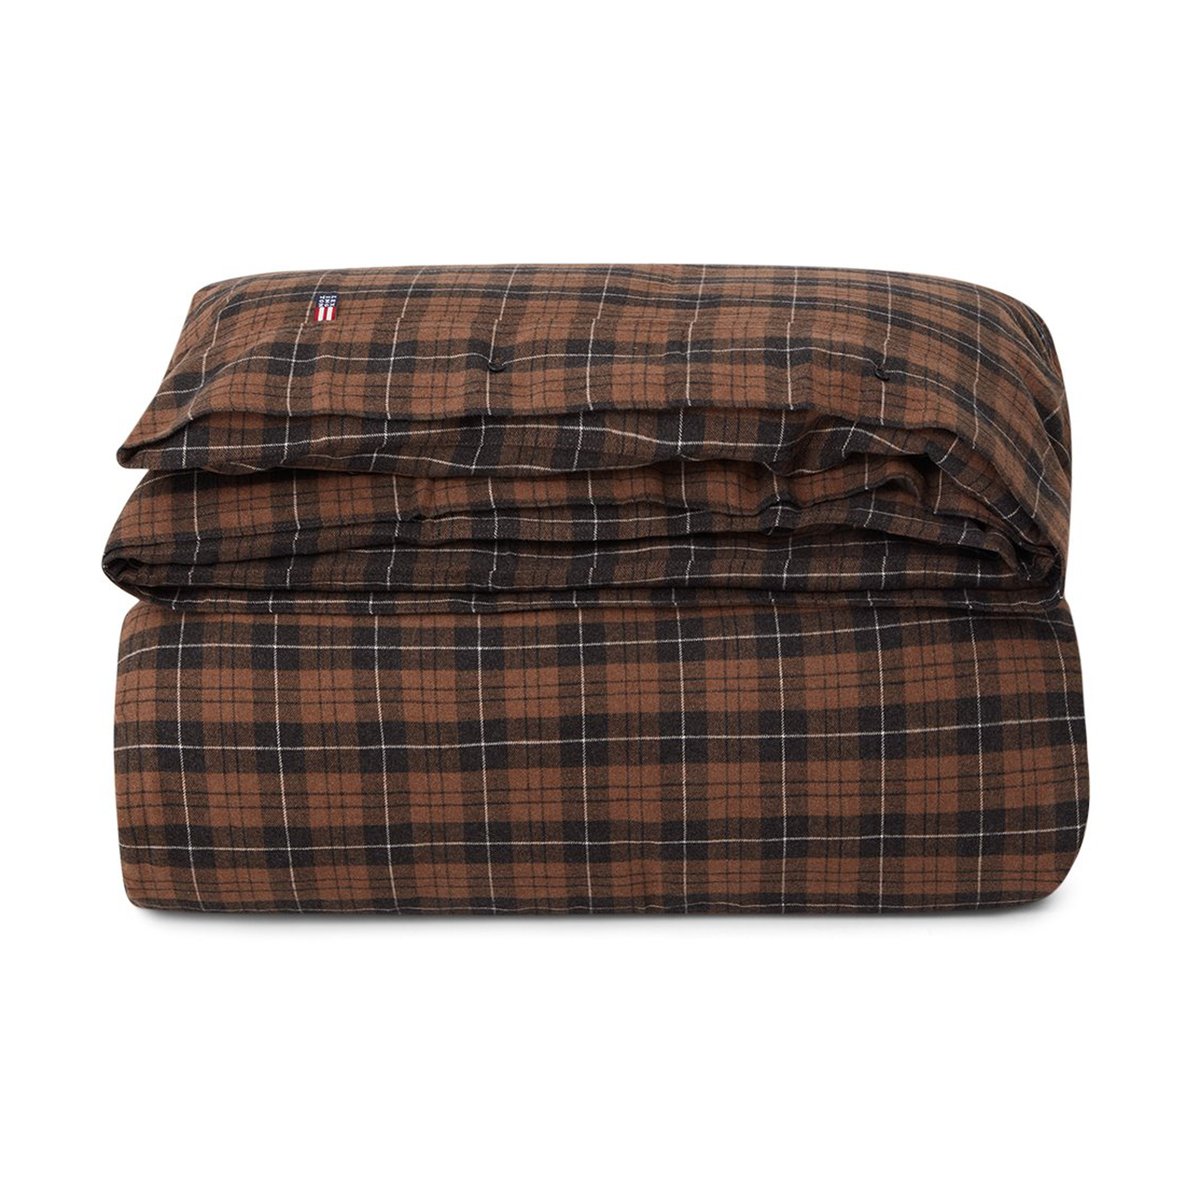 Lexington Checked Cotton Flannel pussilakana 150×210 cm Brown-dark gray